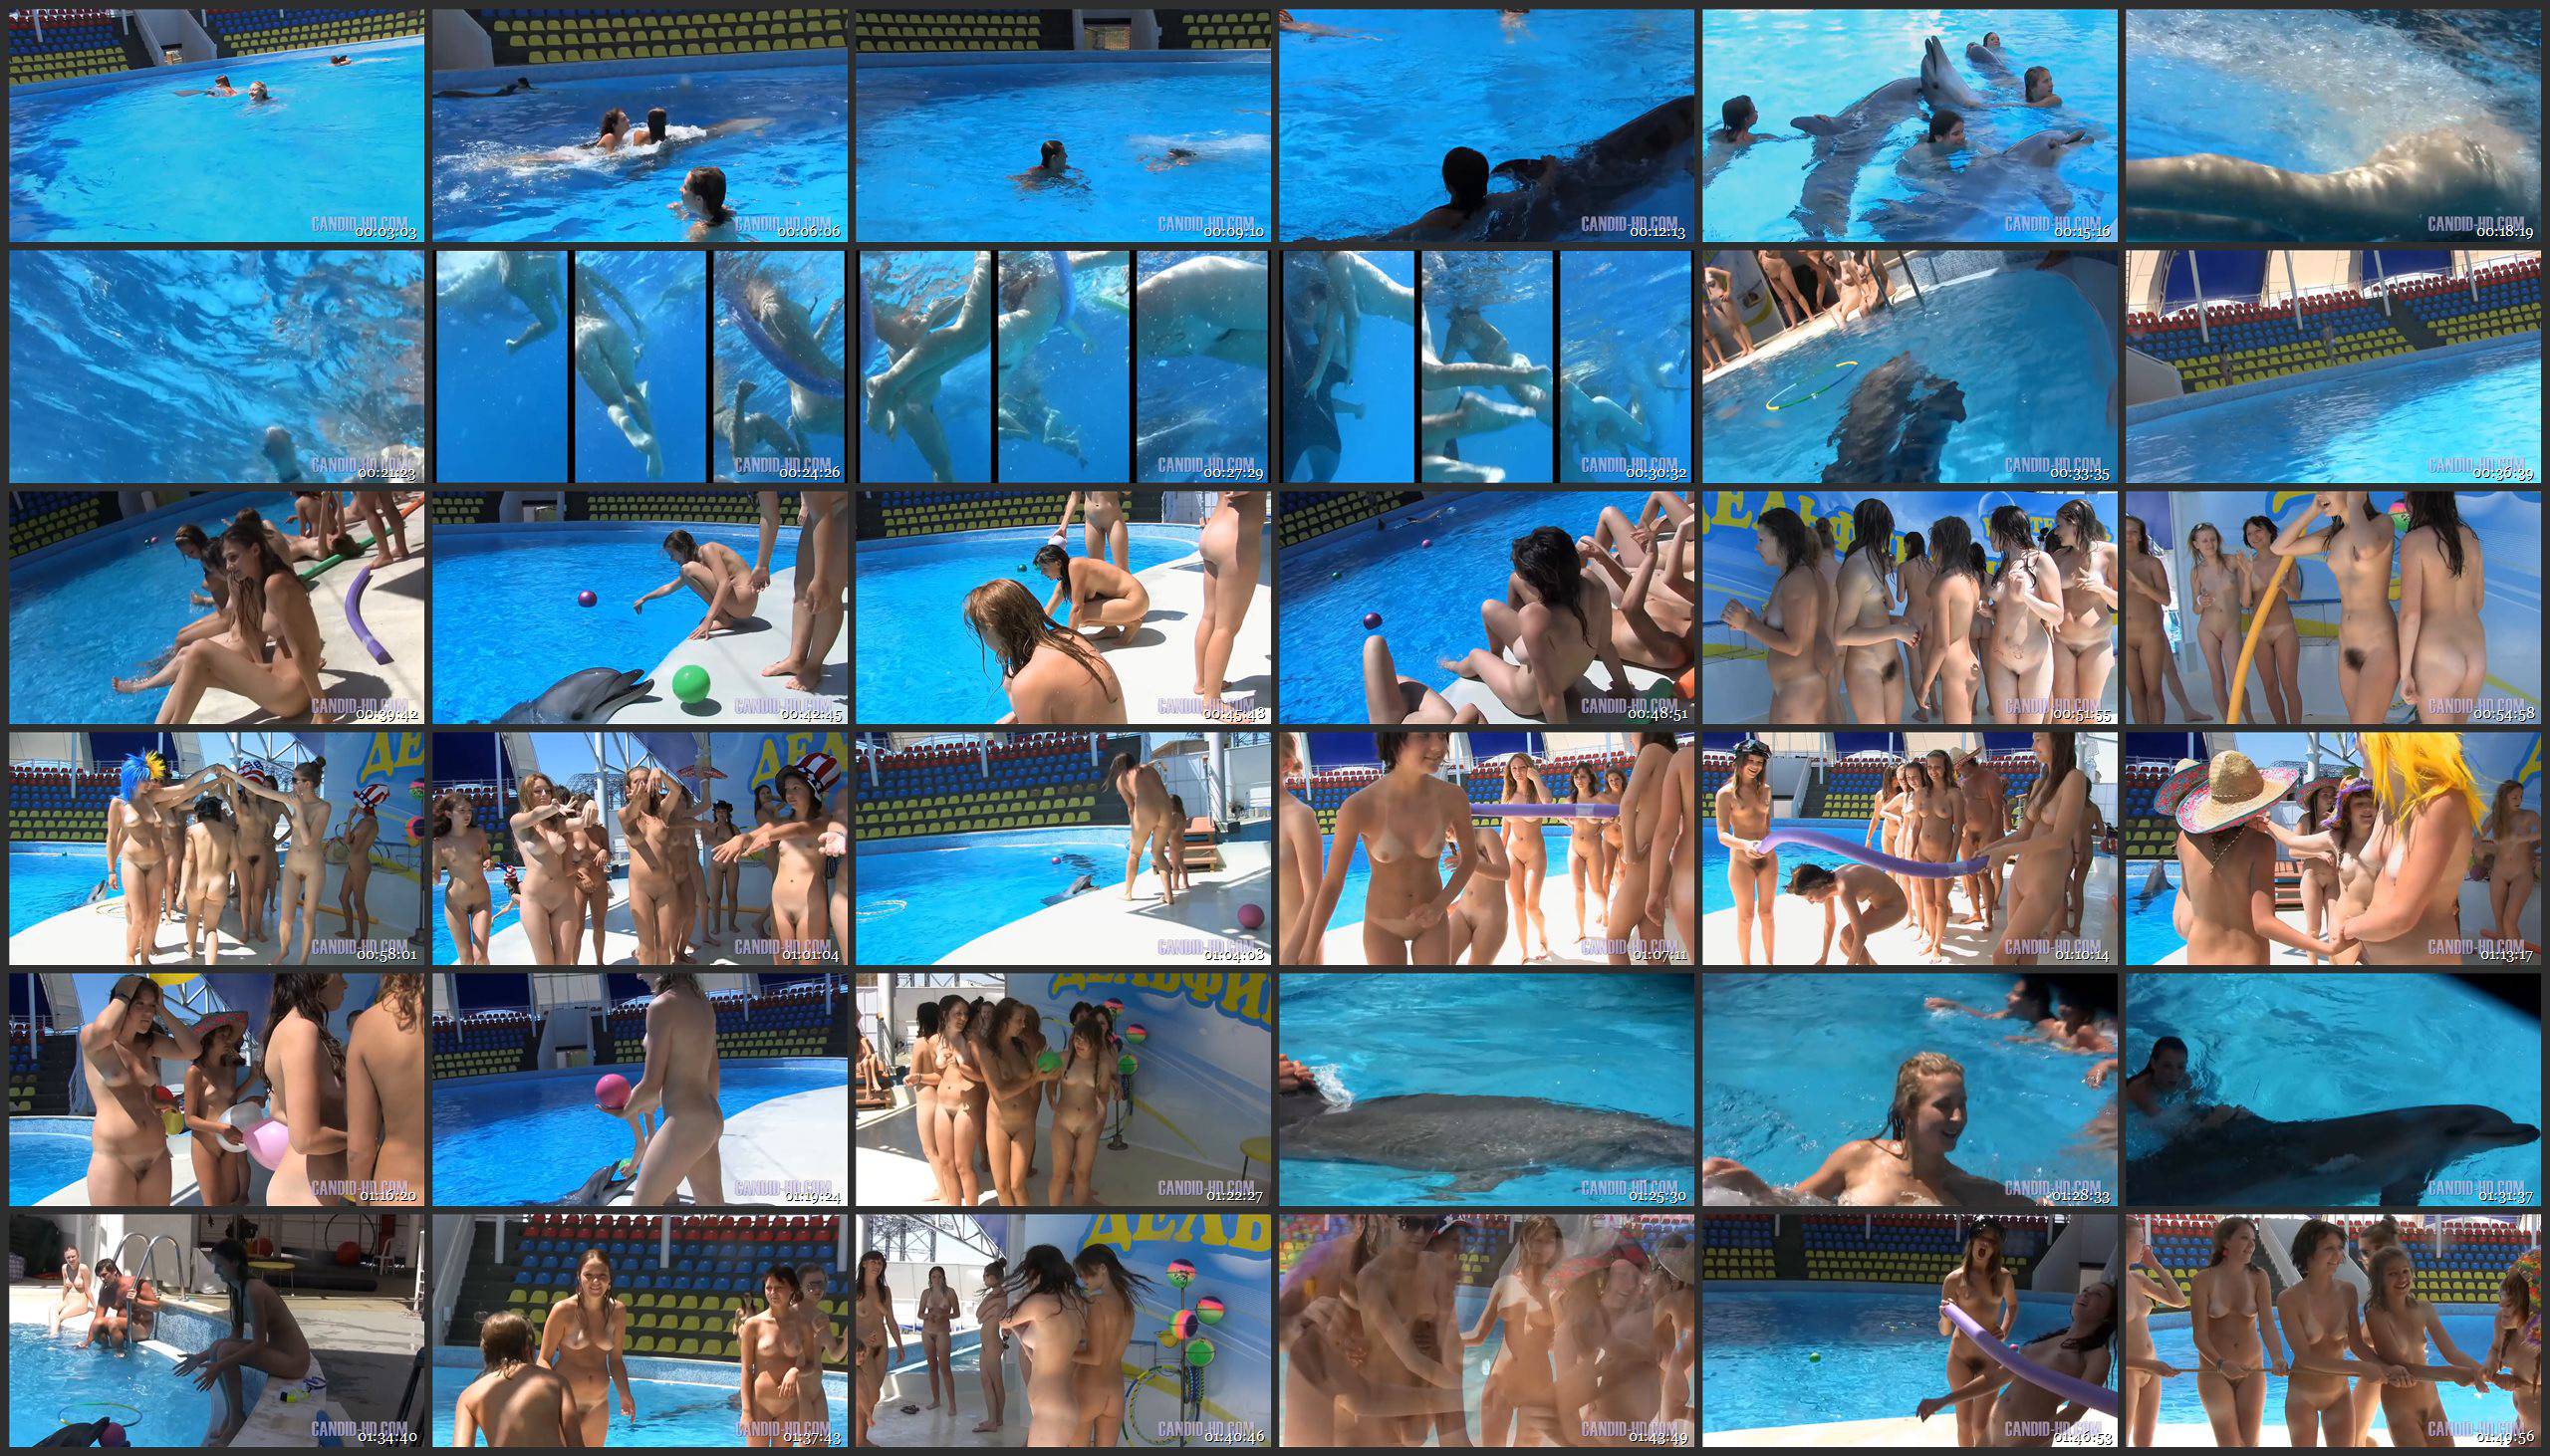 Candid-HD.com Amazing Dolphin Encounter - Thumbnails